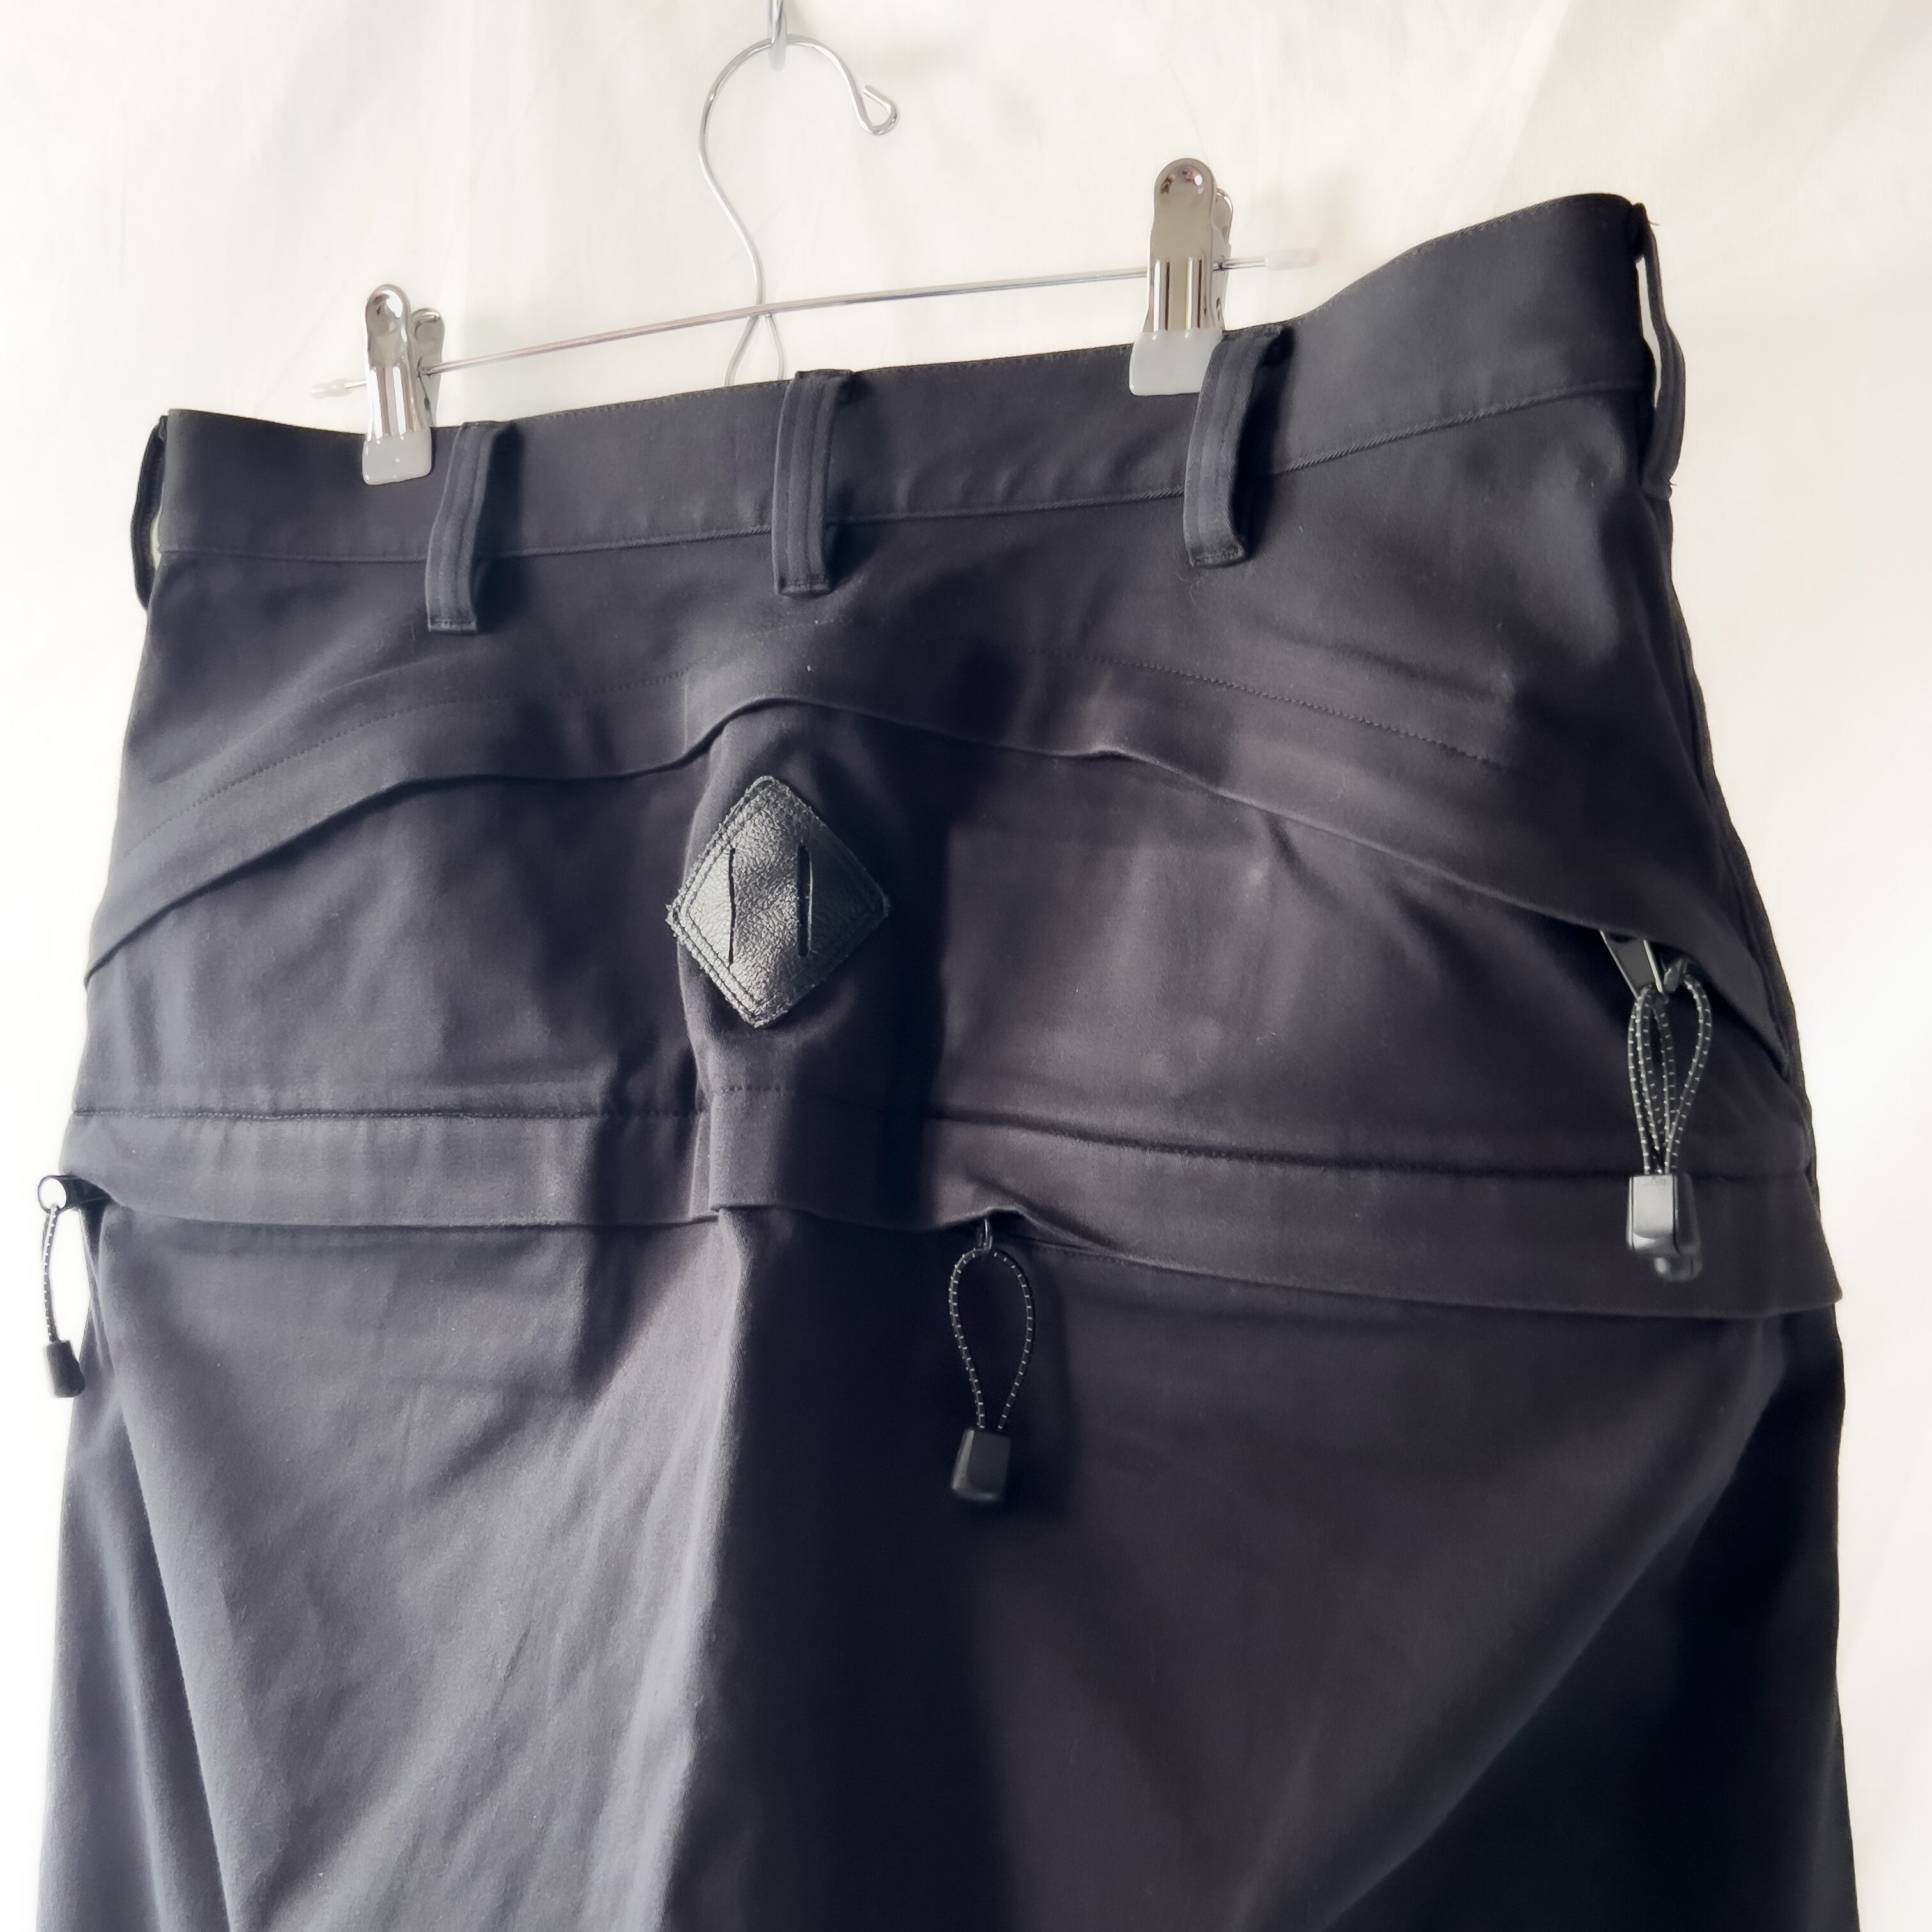 Y-3” hidde pockets gear Tapered black pants ワイスリー テーパード